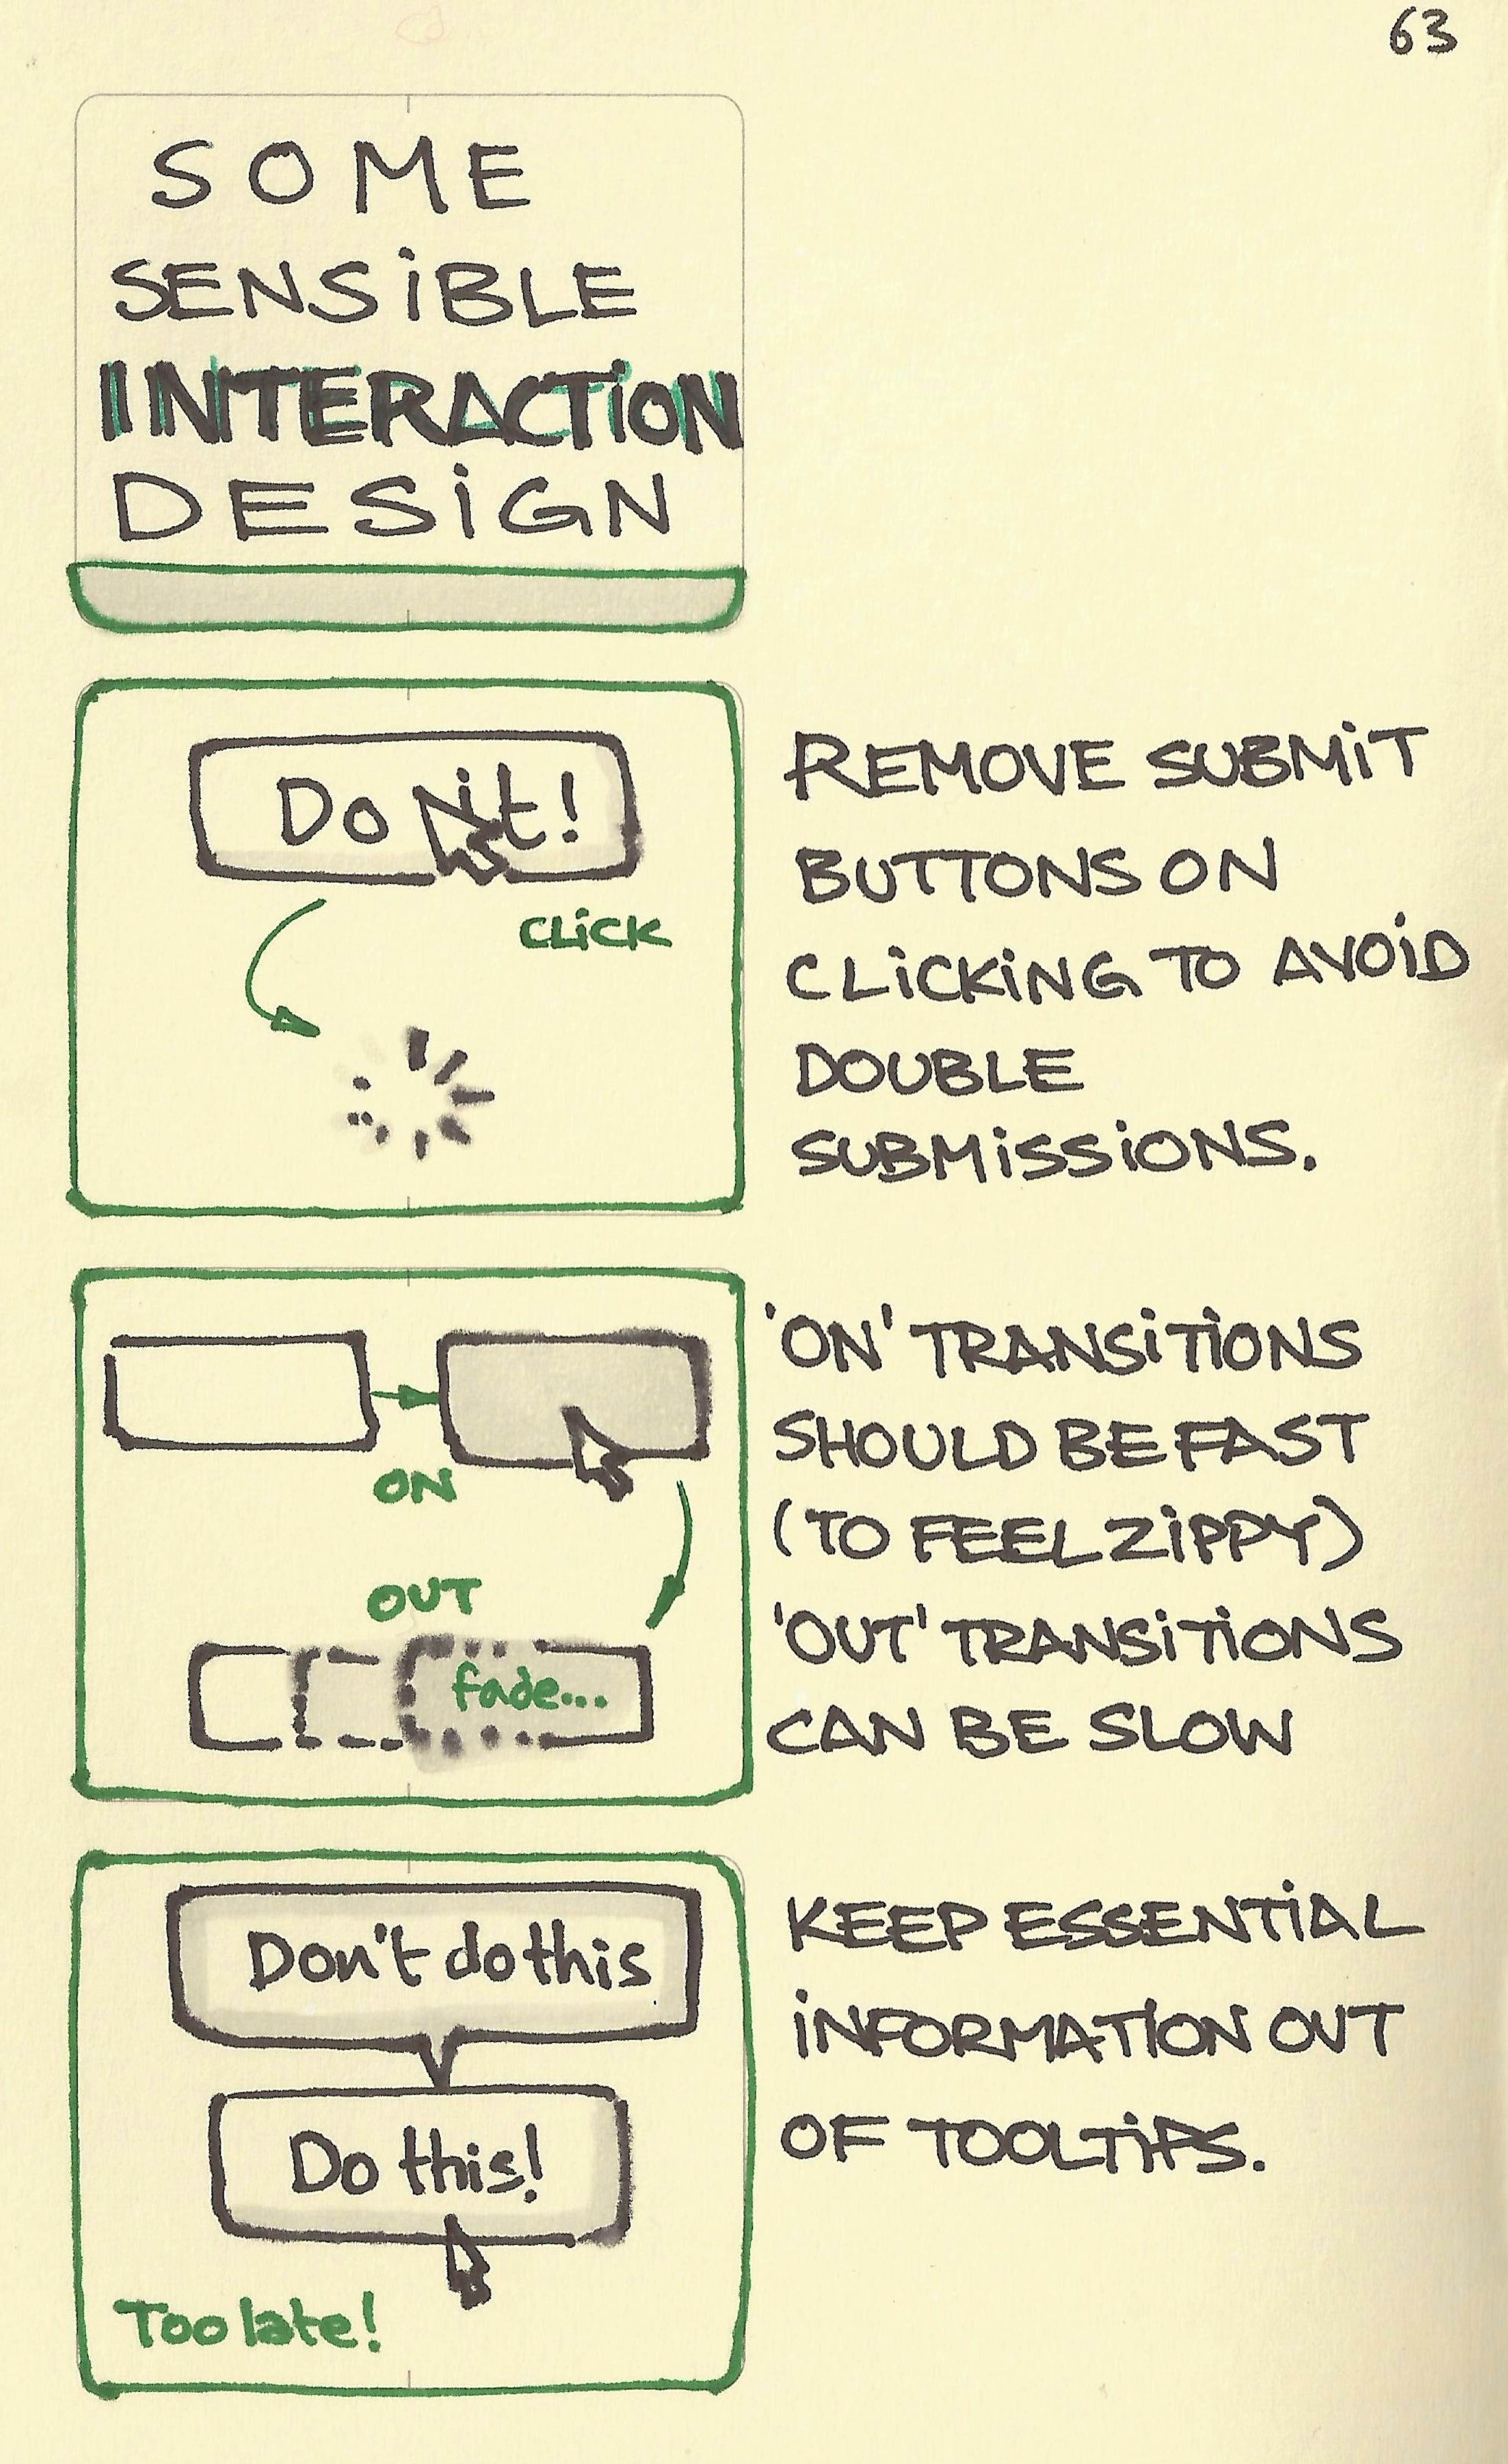 Some sensible interaction design - Sketchplanations